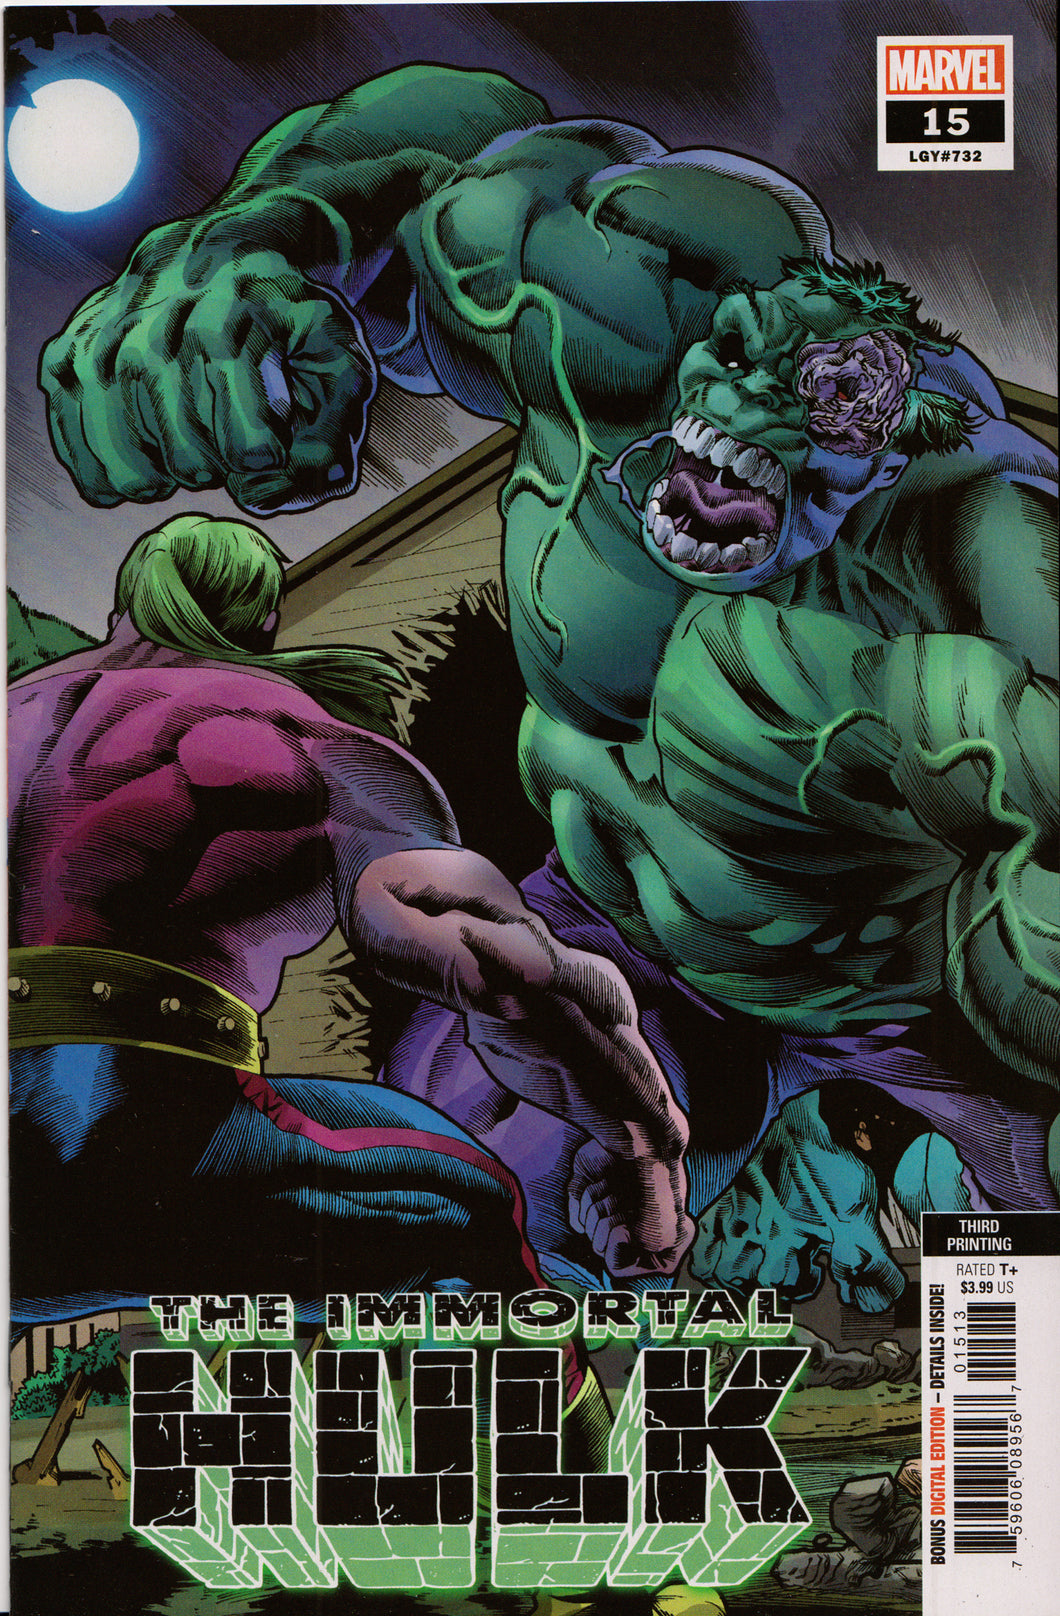 THE IMMORTAL HULK #15 (3RD PRINT) COMIC BOOK ~ Marvel Comics